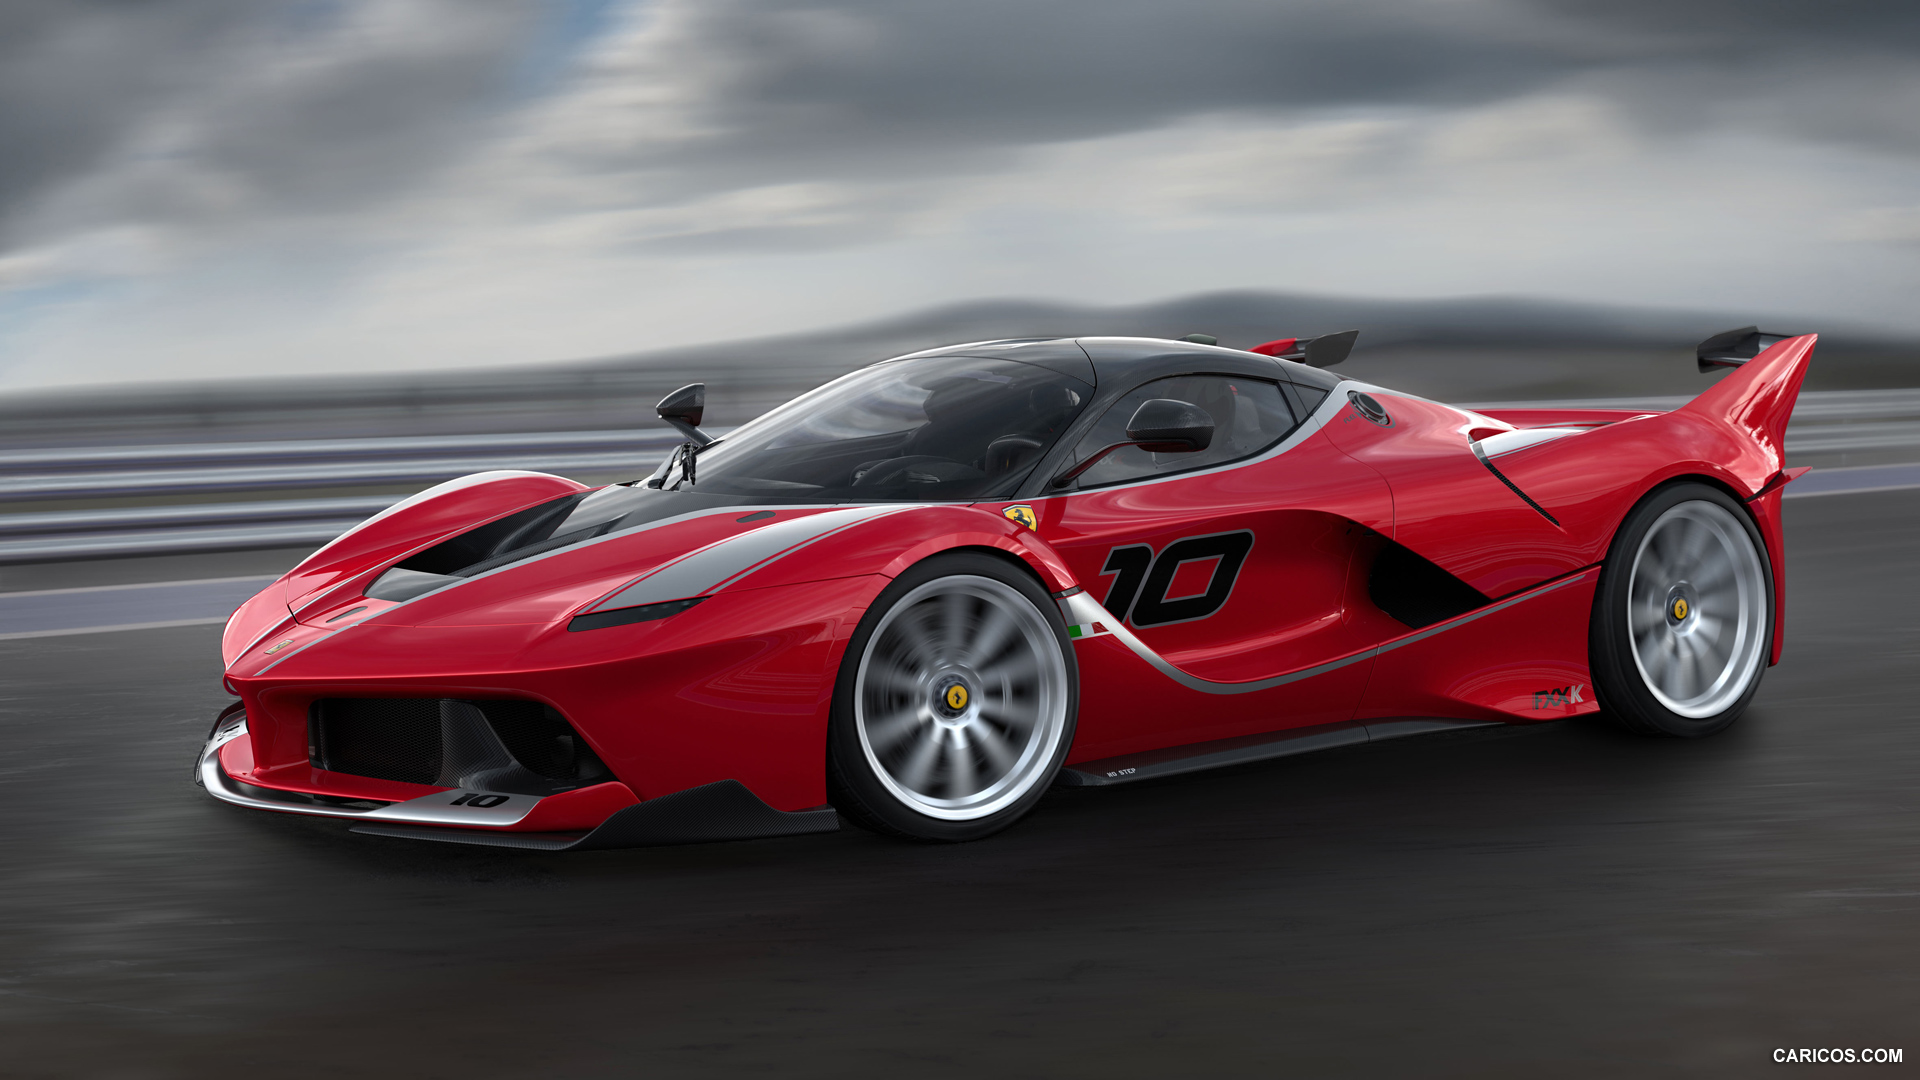 Amazing 2015 Ferrari FXX K Pictures & Backgrounds